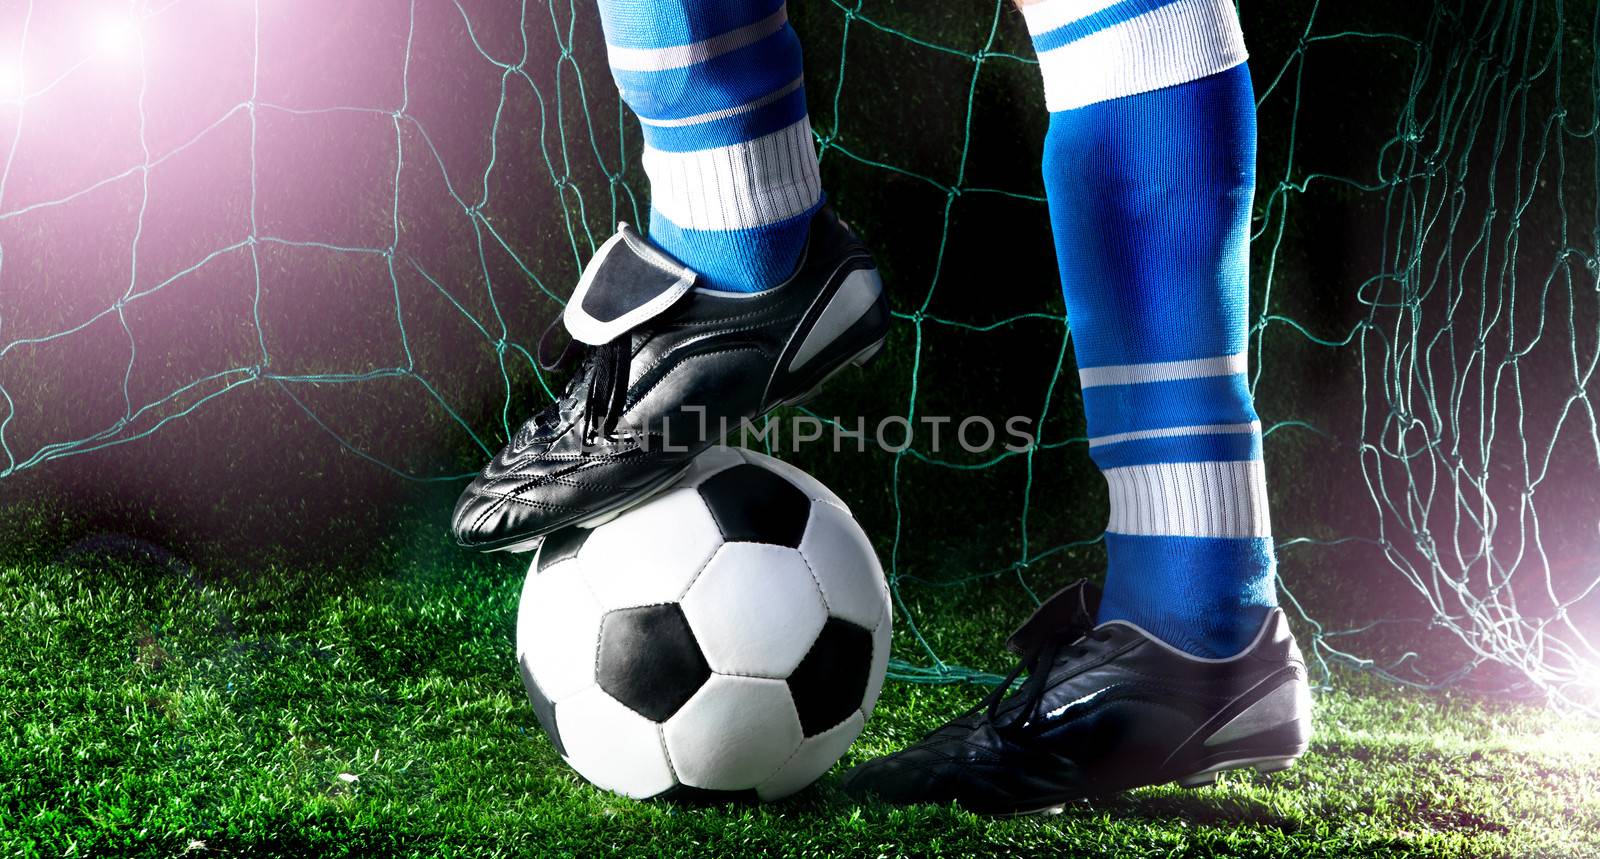 Soccer player's feet by GekaSkr